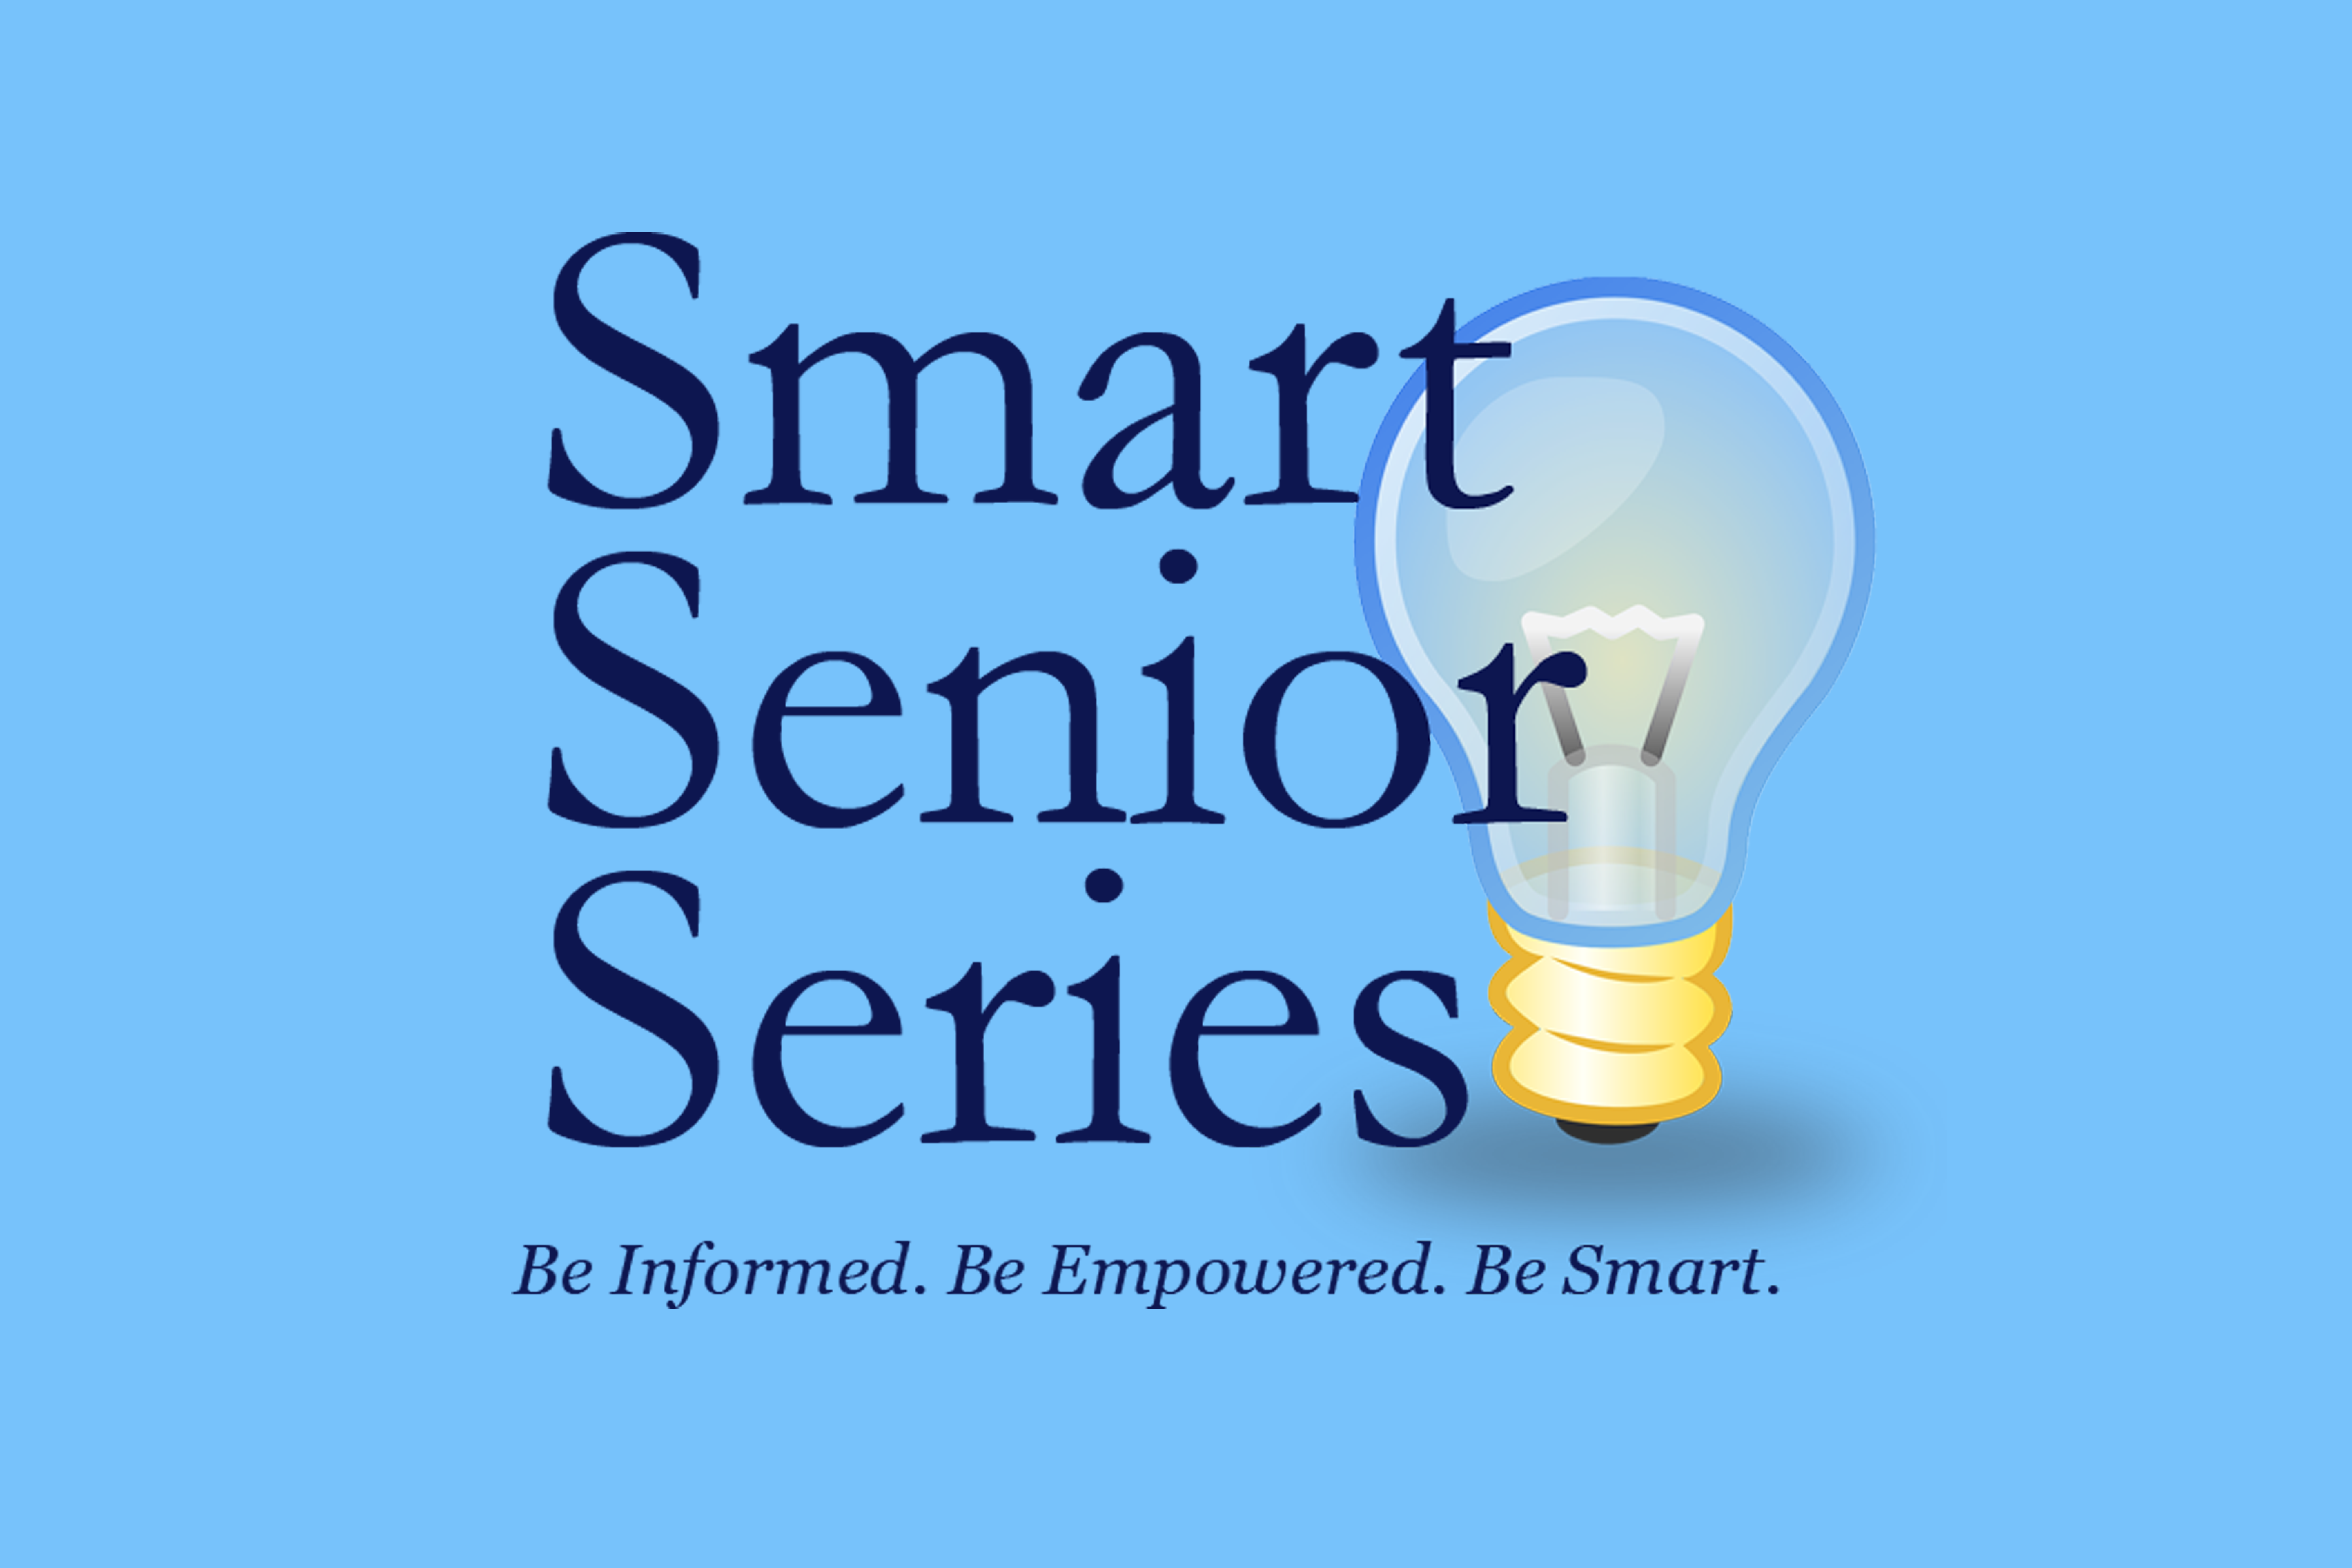 The Smart Senior Series